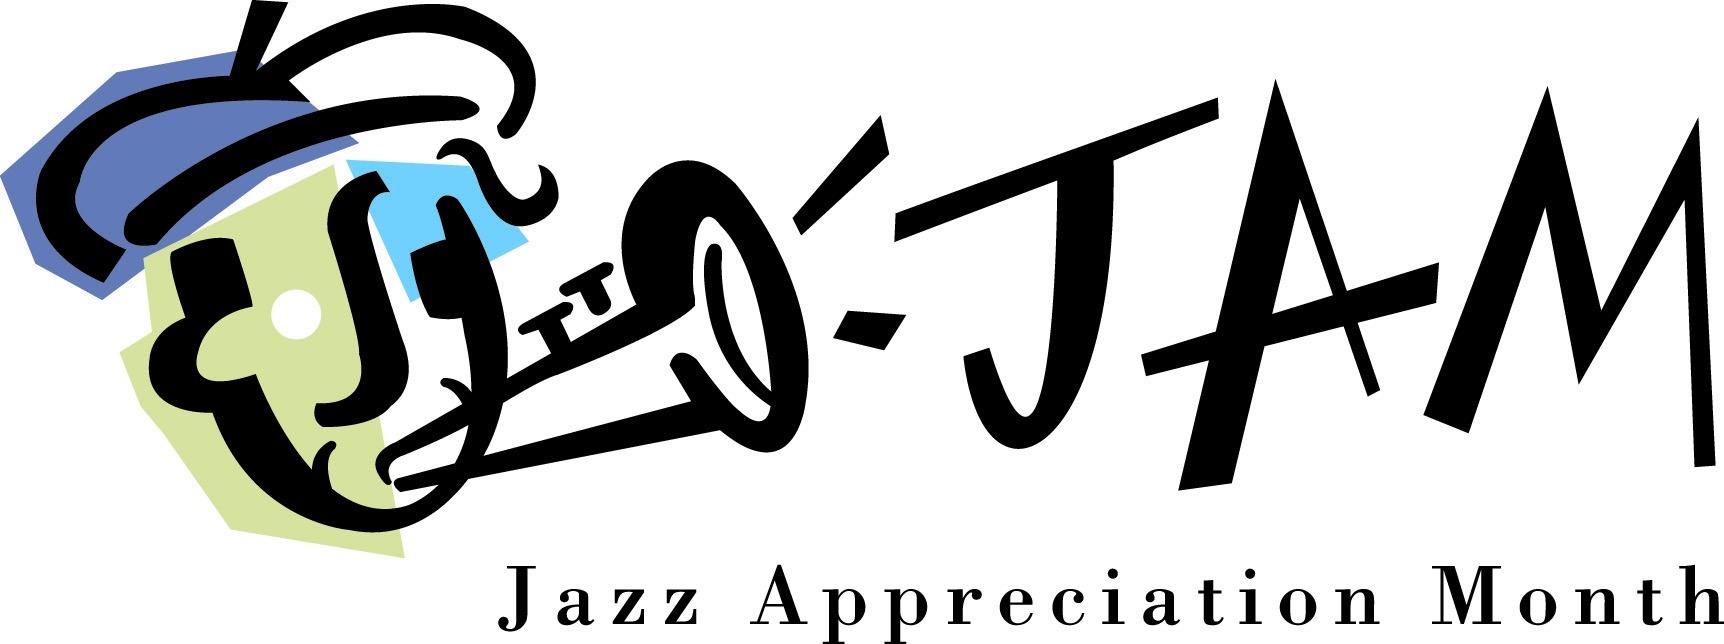 jazz appreciation month logo